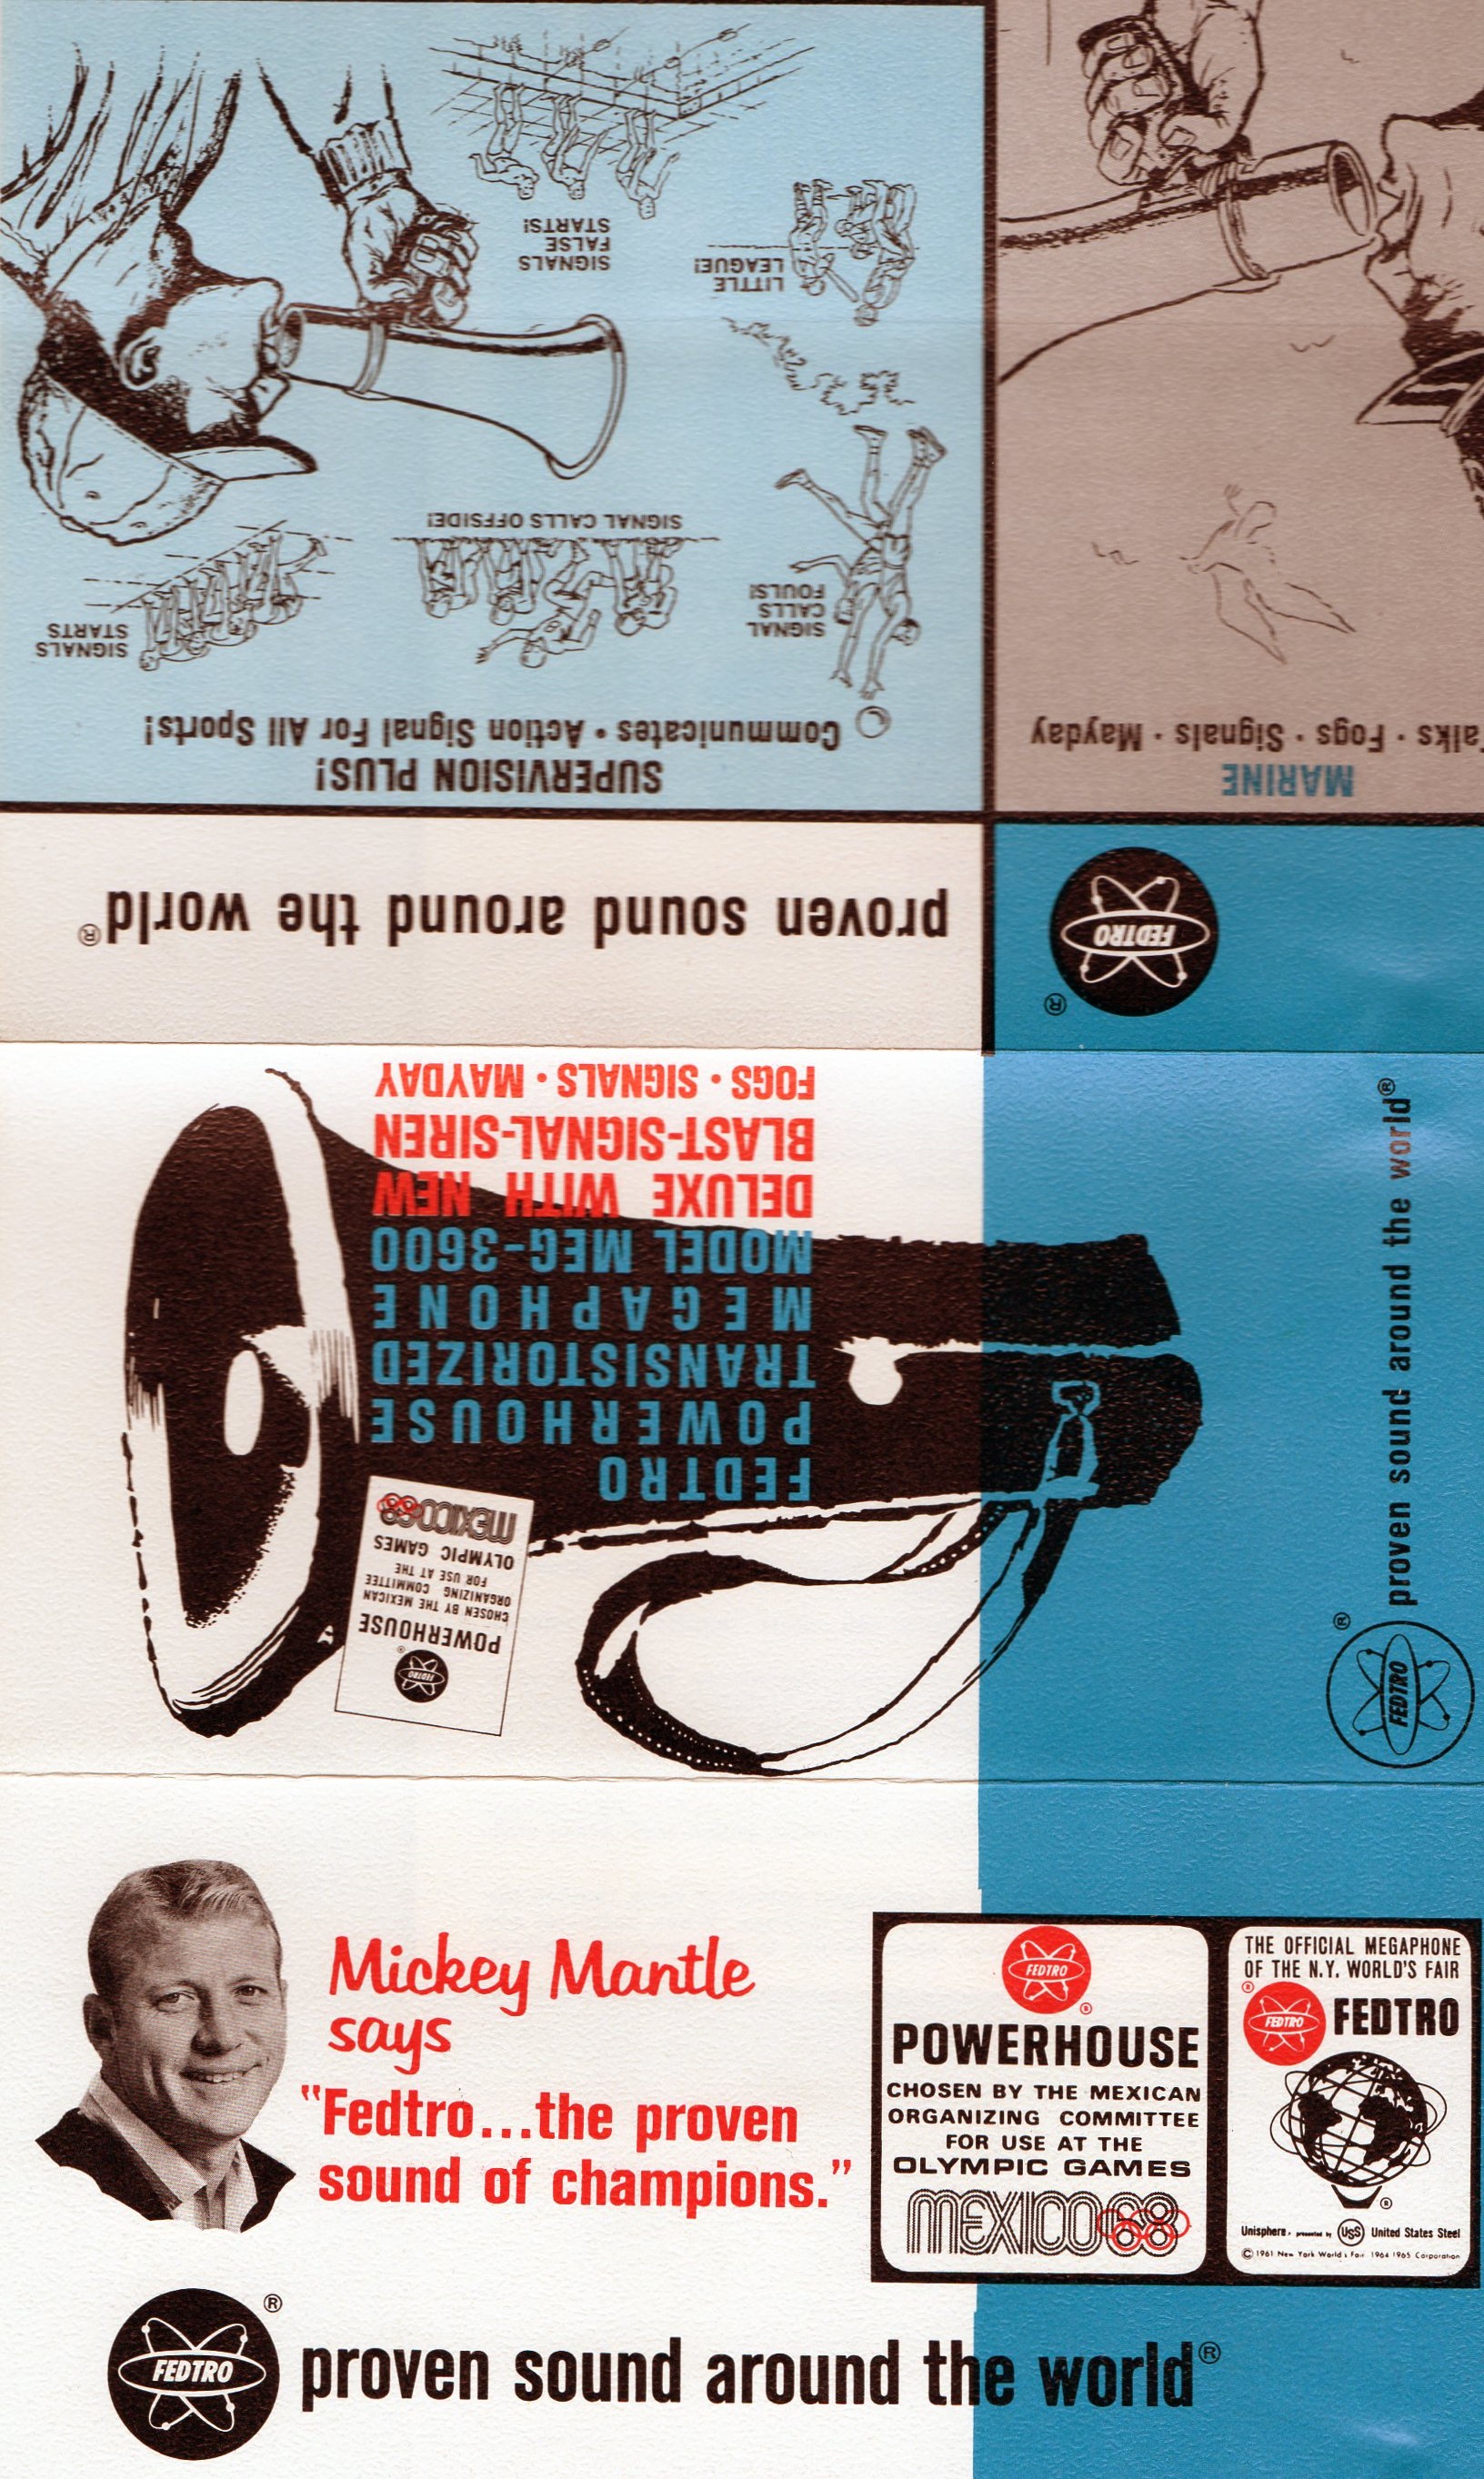 1969-71 megaphone brochure